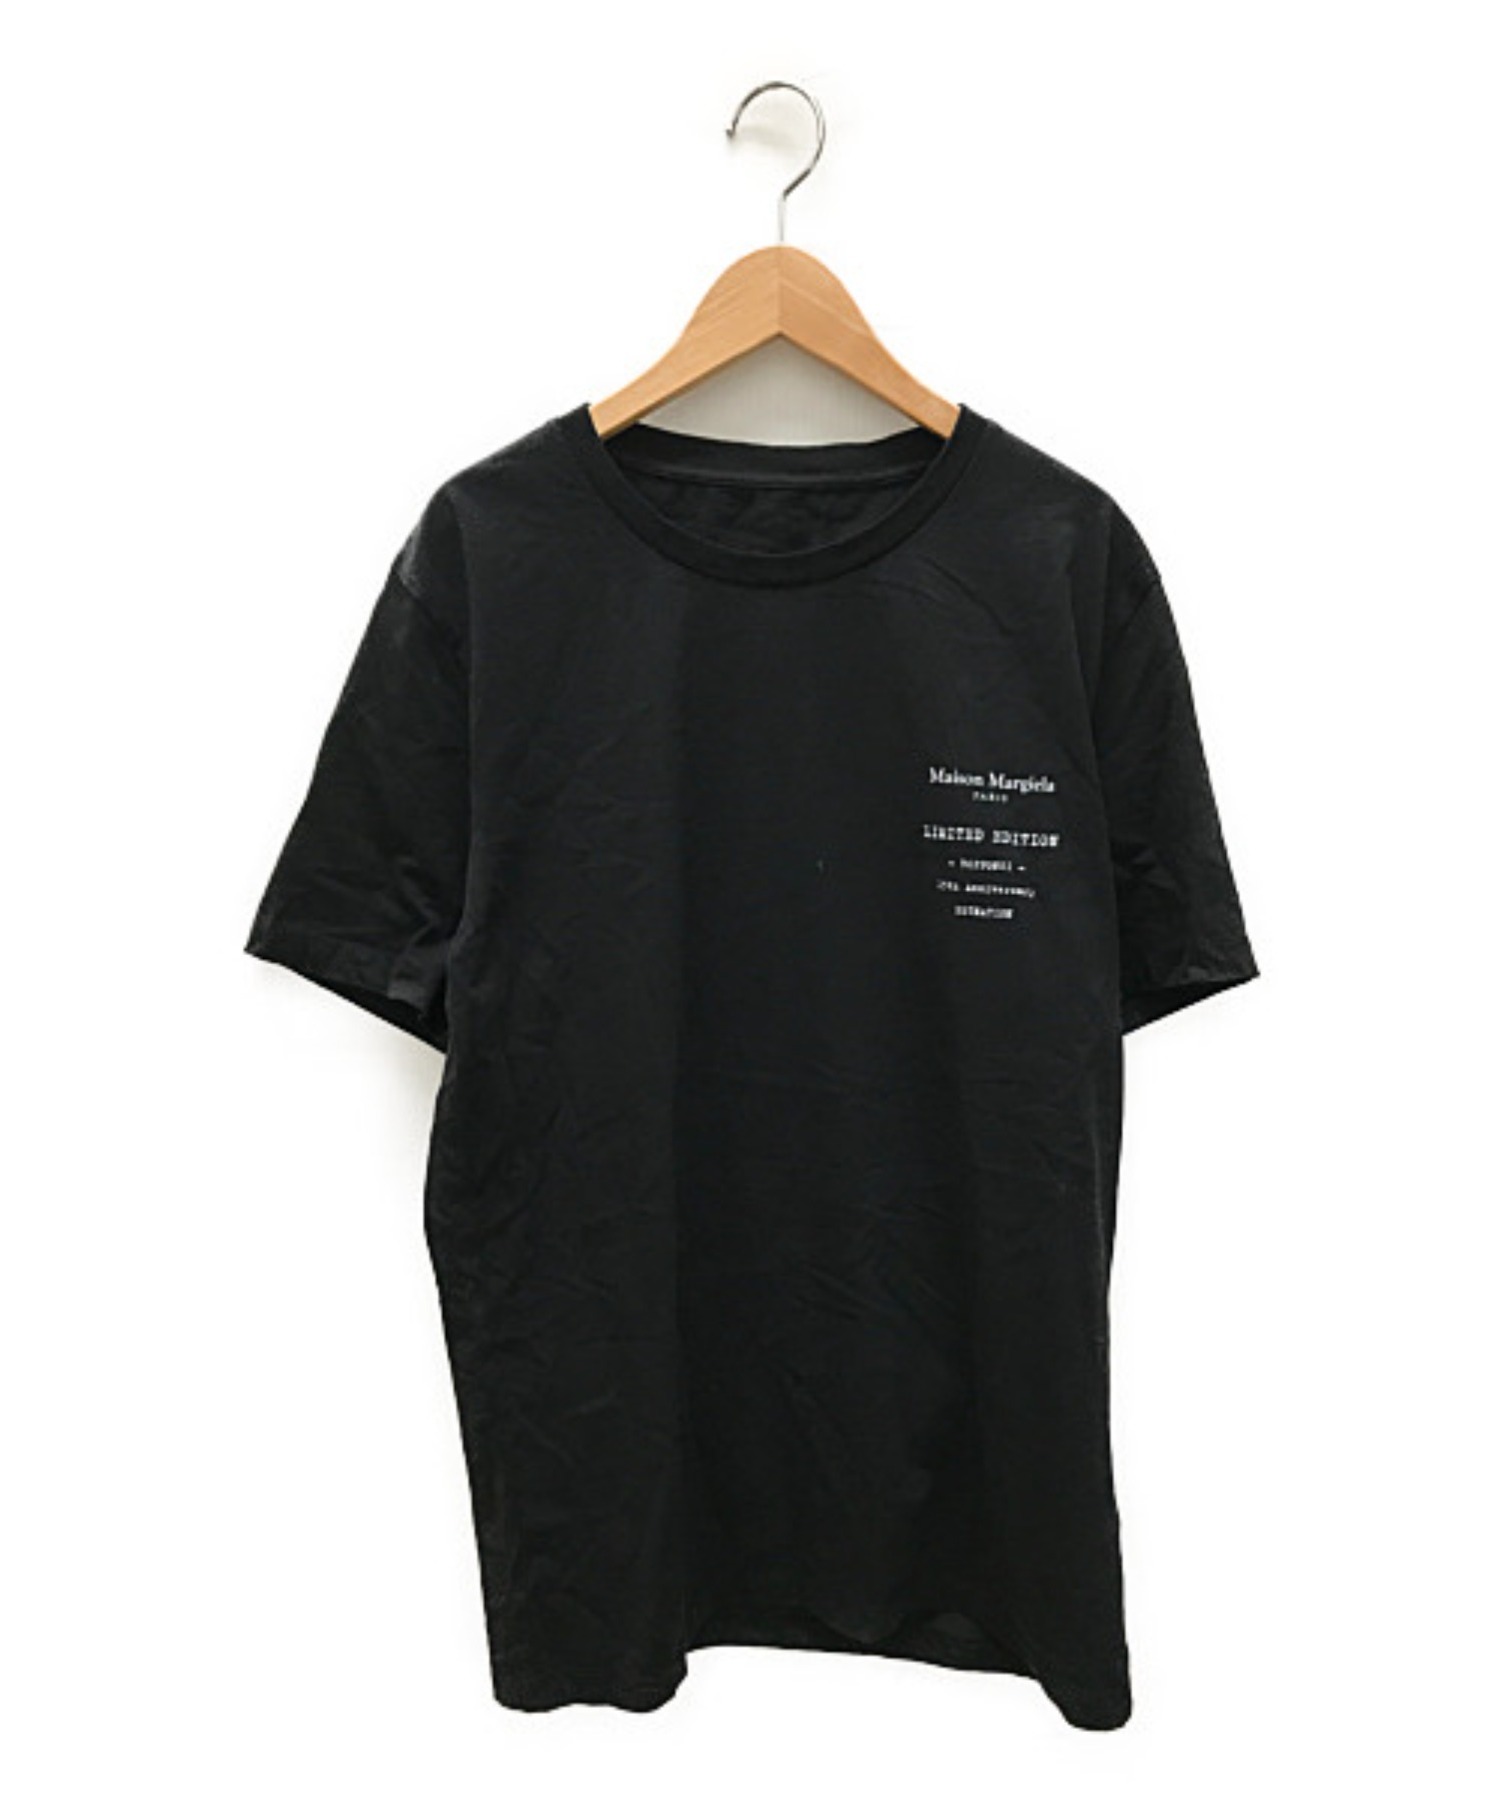 Maison Margiela 10×ESTNATION (メゾン マルジェラ10×エストネーション) フロントプリントTシャツ ブラック×ホワイト  サイズ:SIZE M